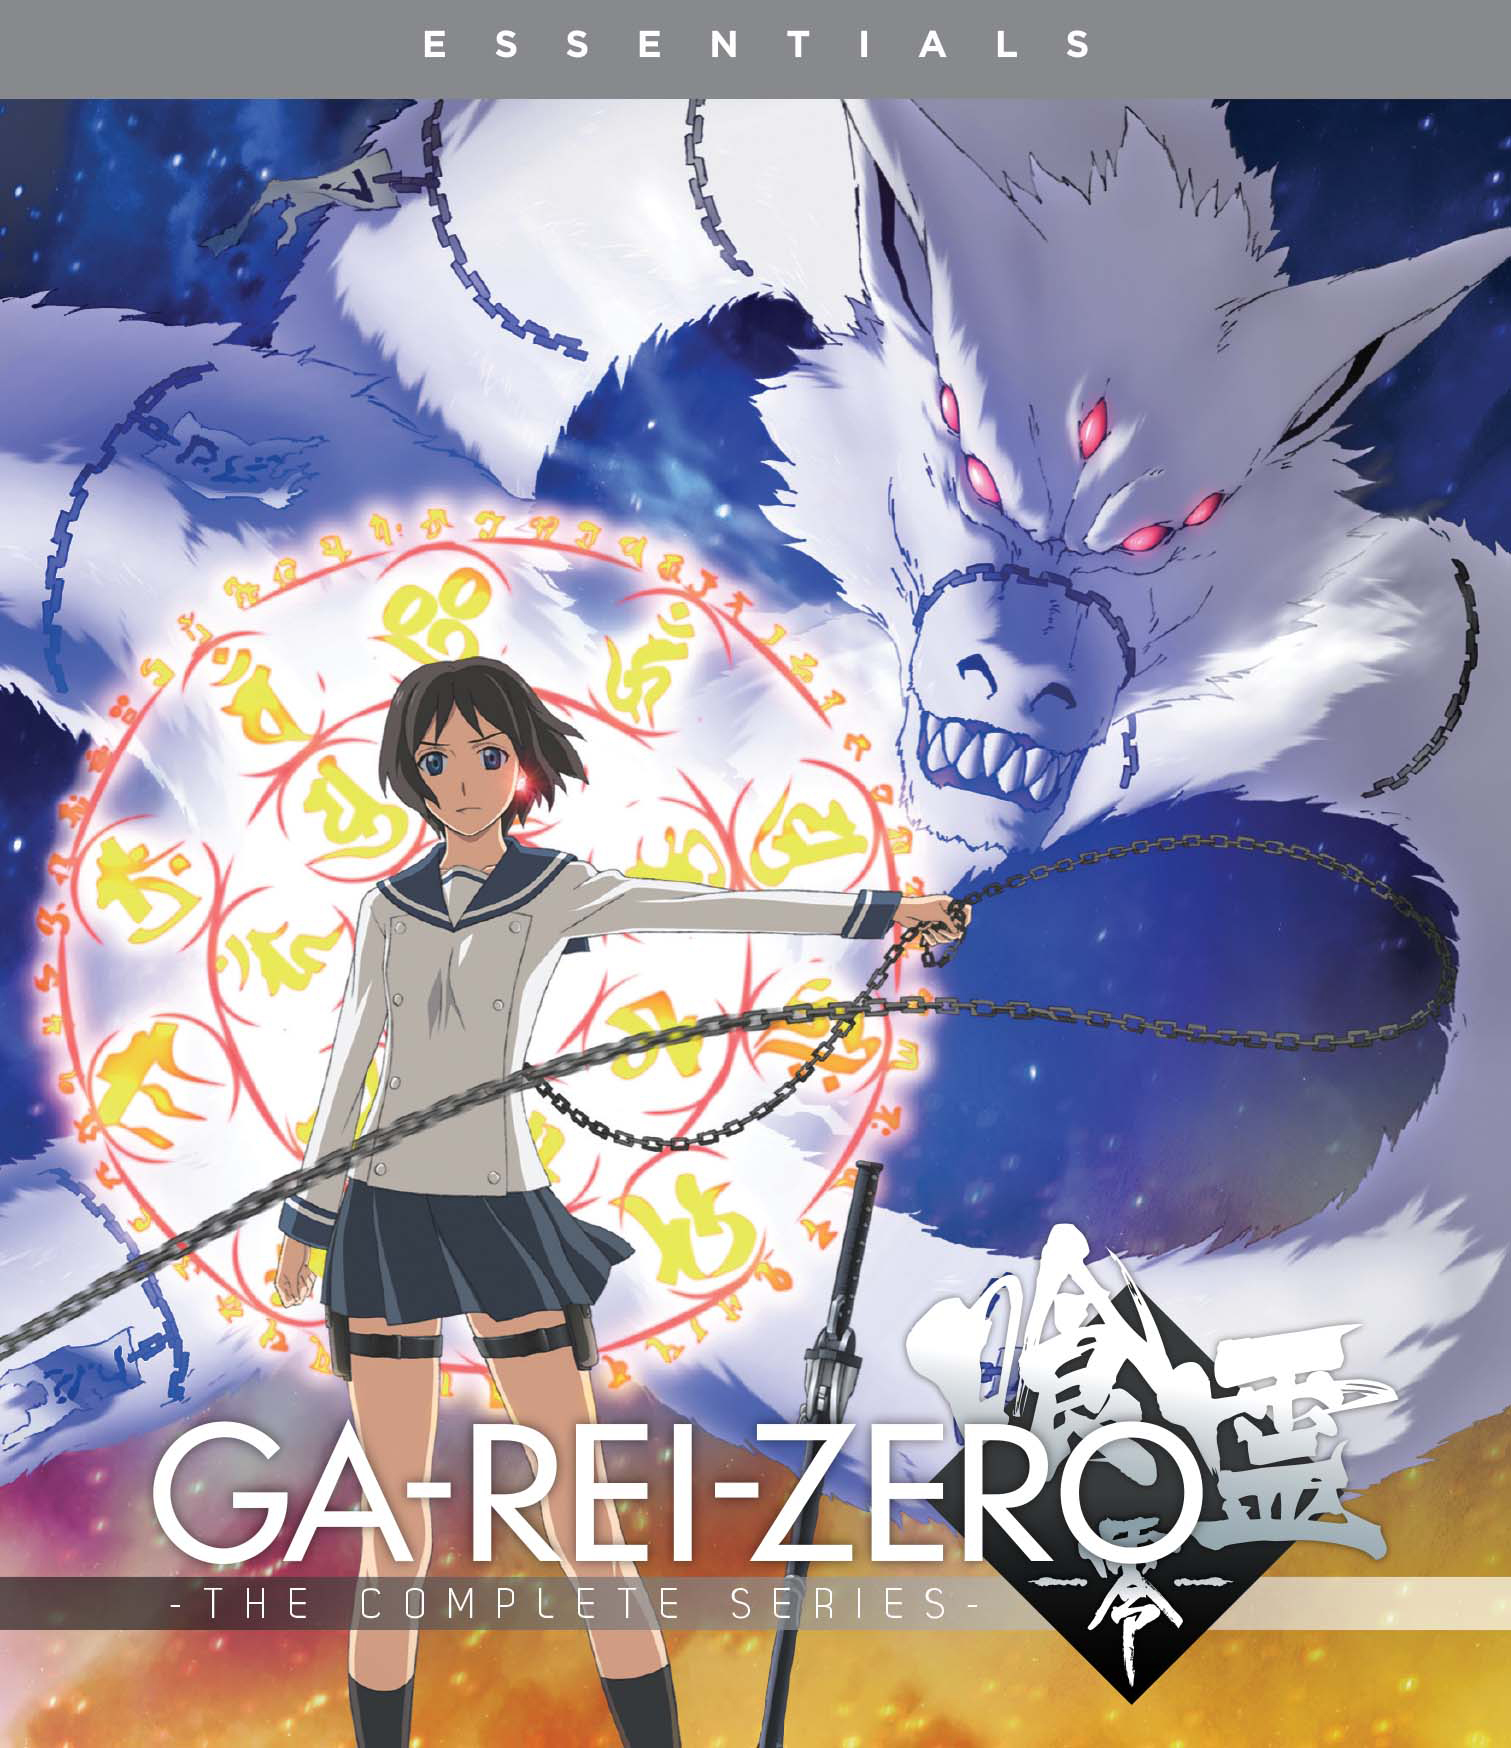 Ga-Rei-Zero Season 1: Where To Watch Every Episode